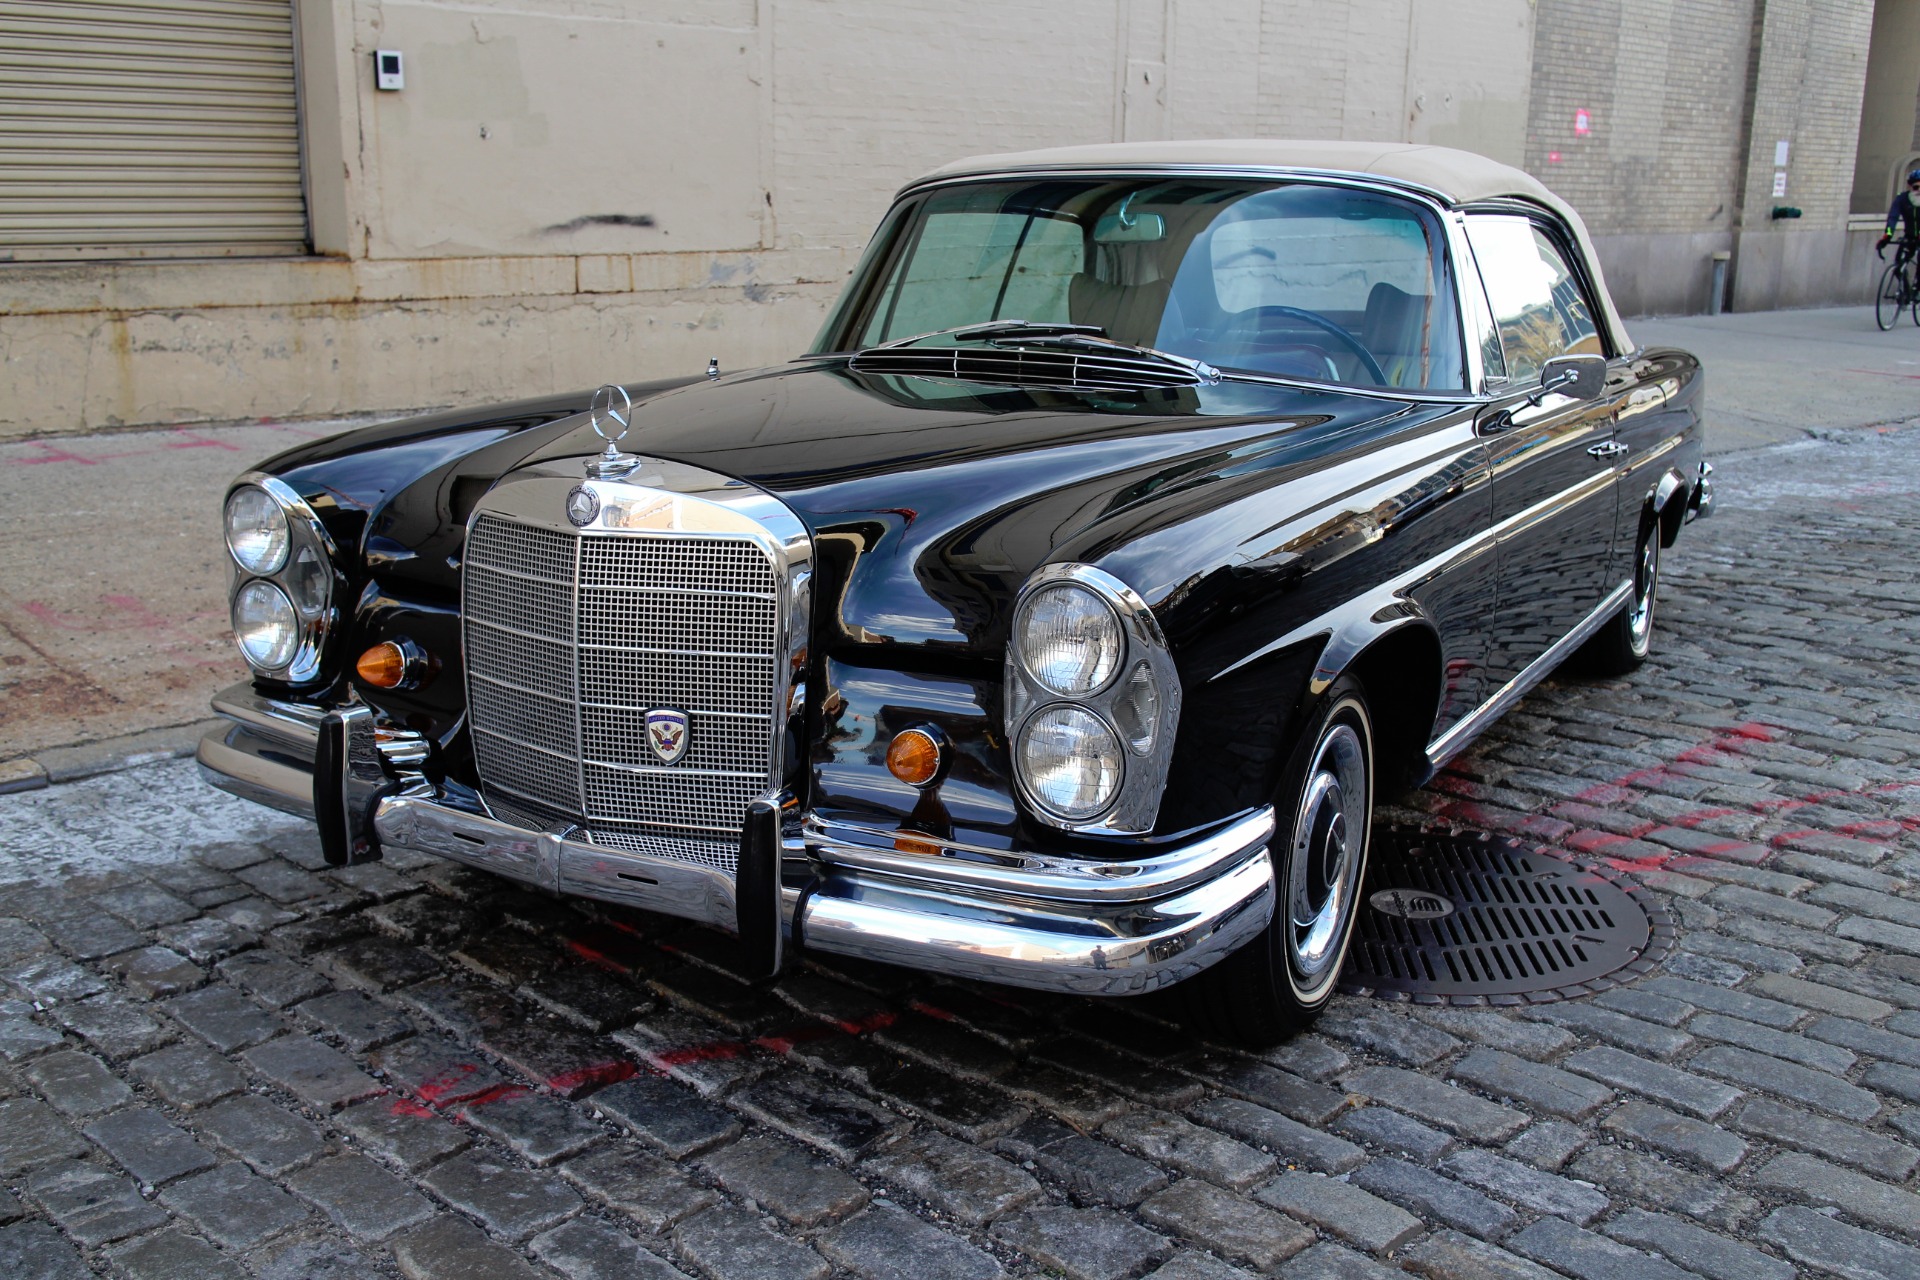 1967 Mercedes-Benz 250 SE Stock # 67250SE for sale near New York, NY